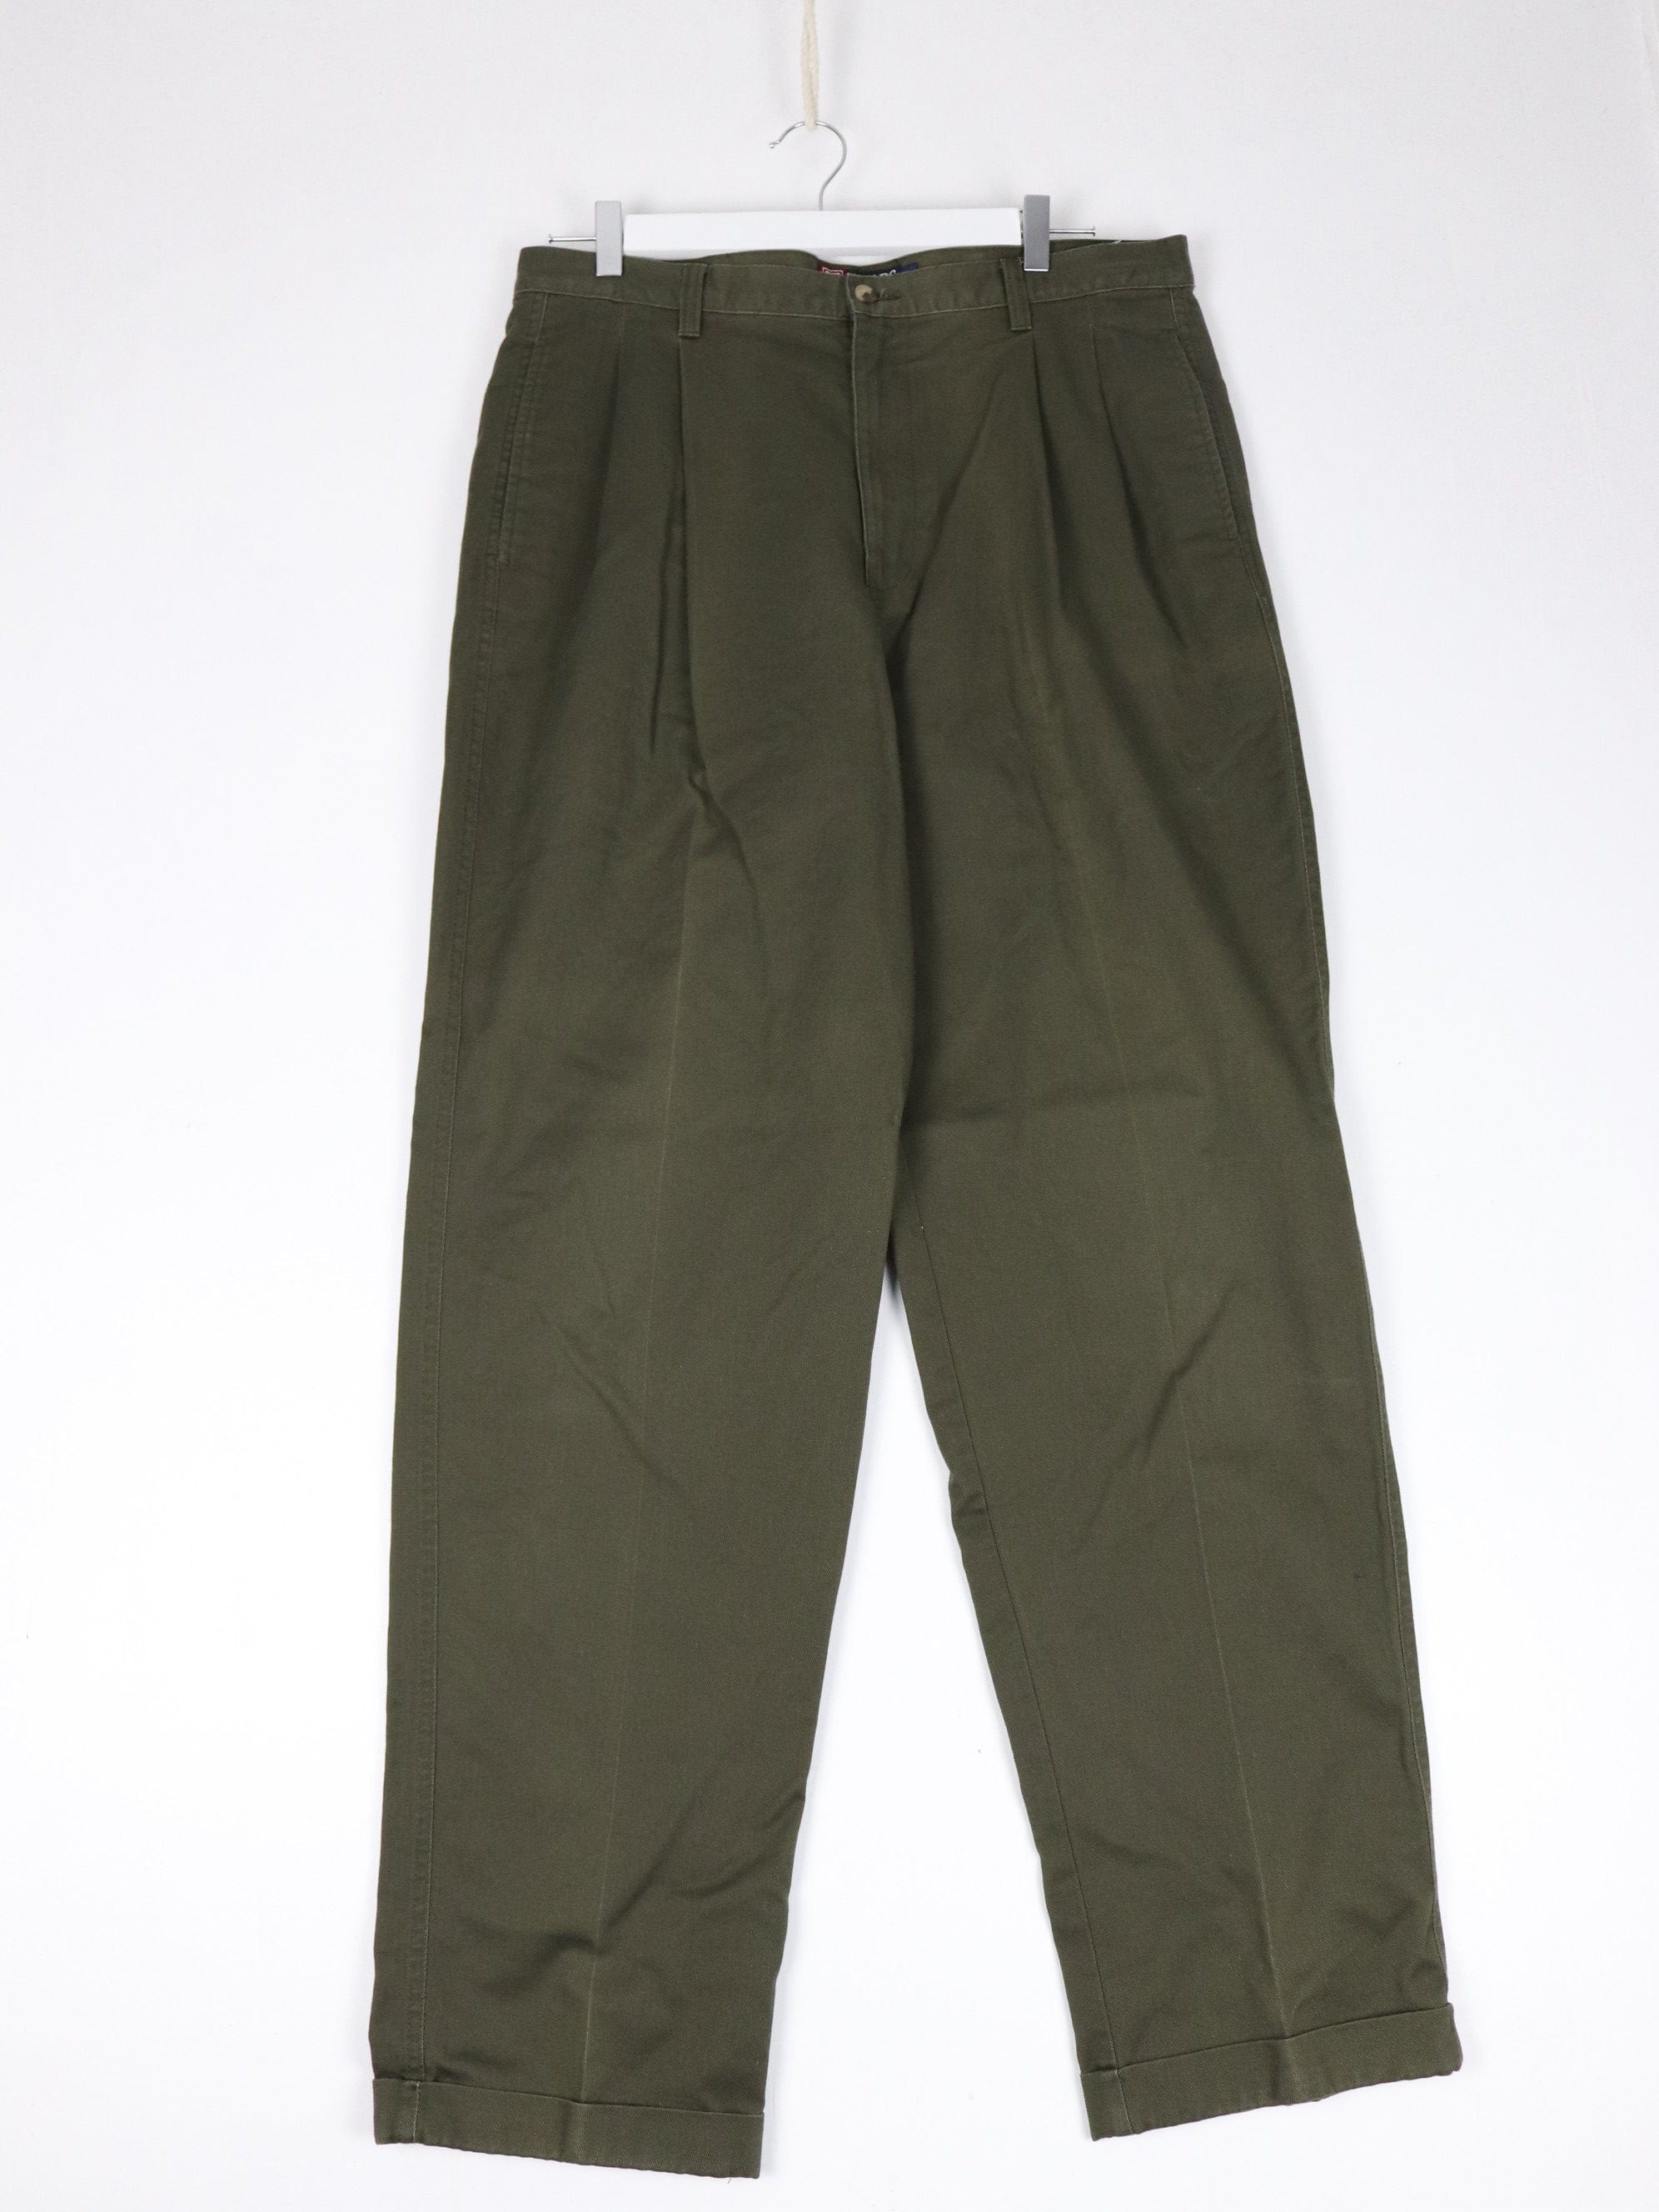 Vintage Chaps Ralph Lauren Pants 36 x 34 Green Chino Trousers